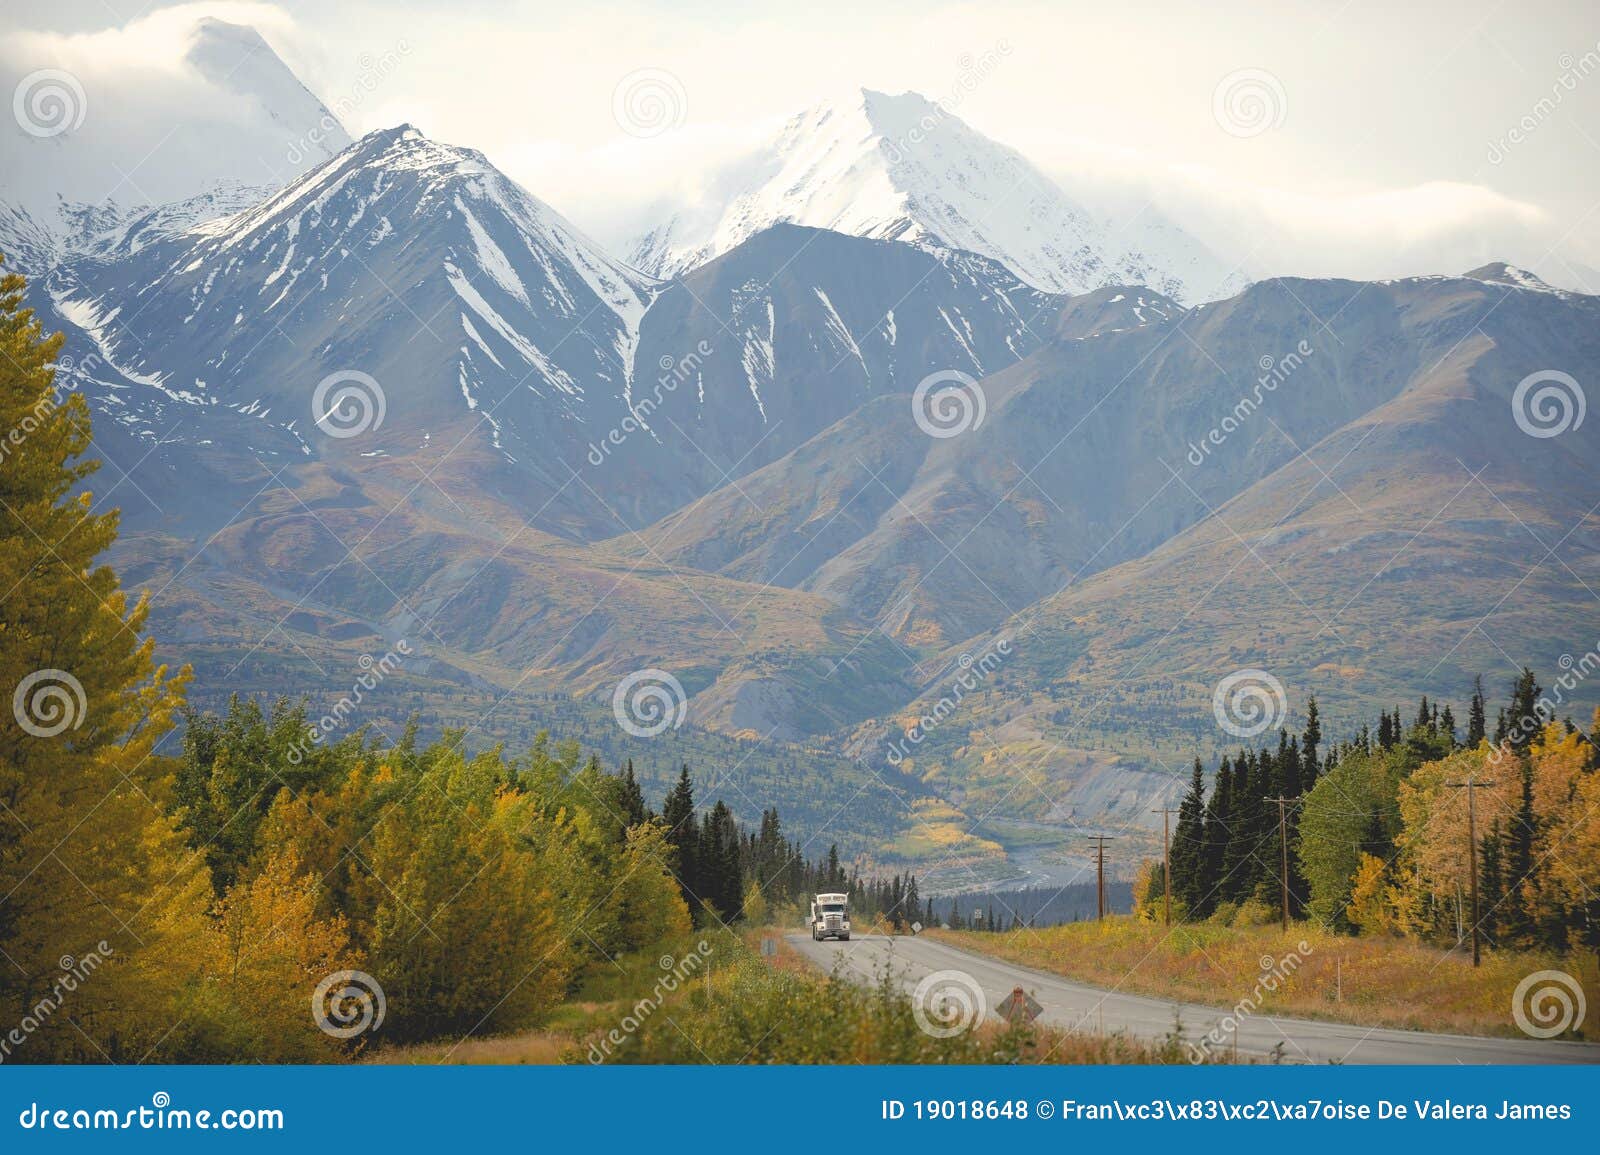 eighteen-wheeler amongst yukon mountains, canada